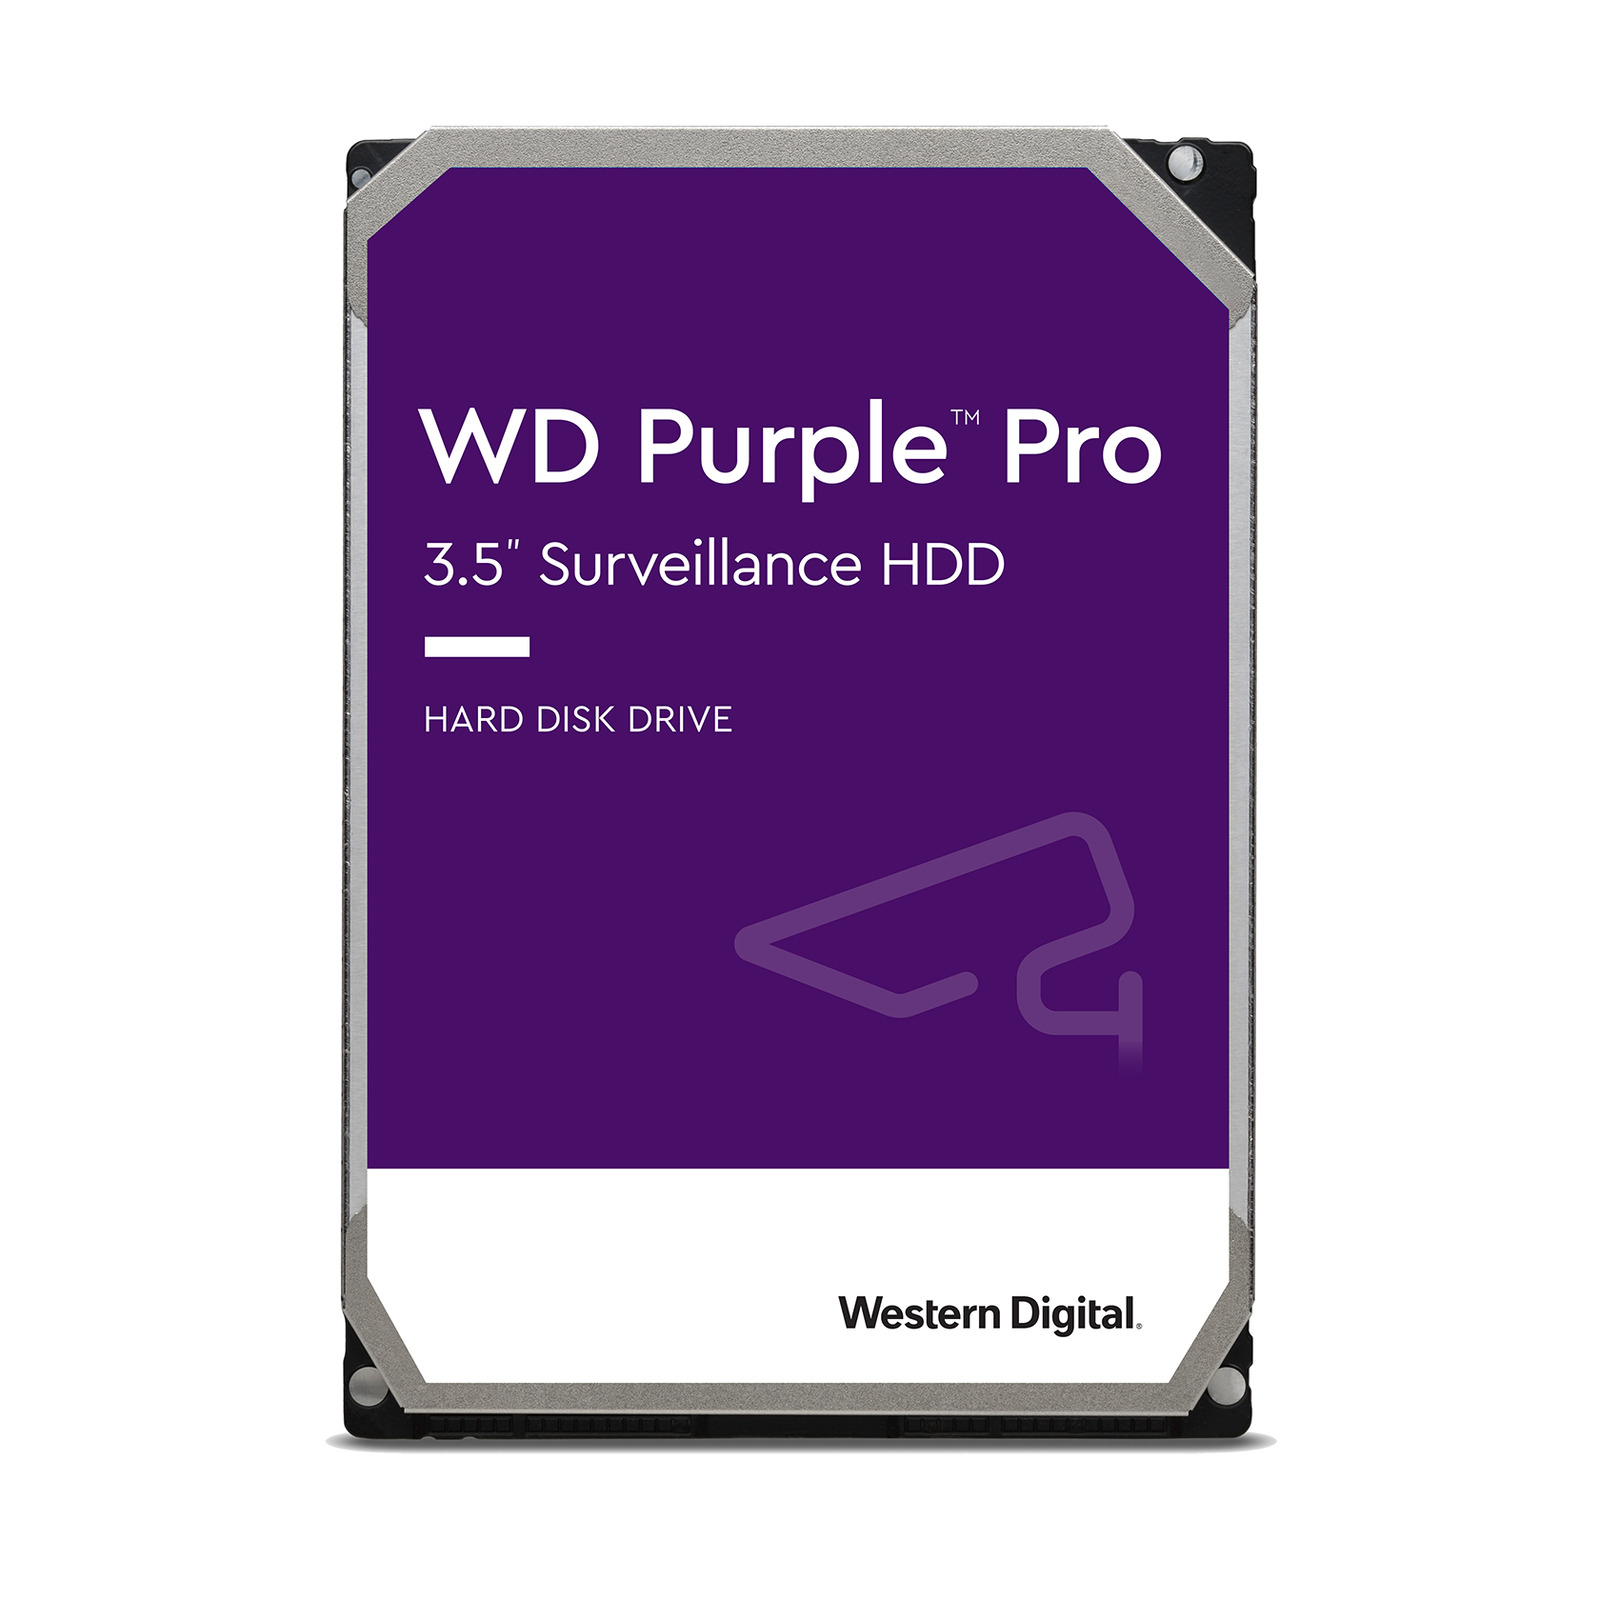 Western Digital 10TB WD Purple Pro Smart Video Internal Hard Drive - WD101PURP